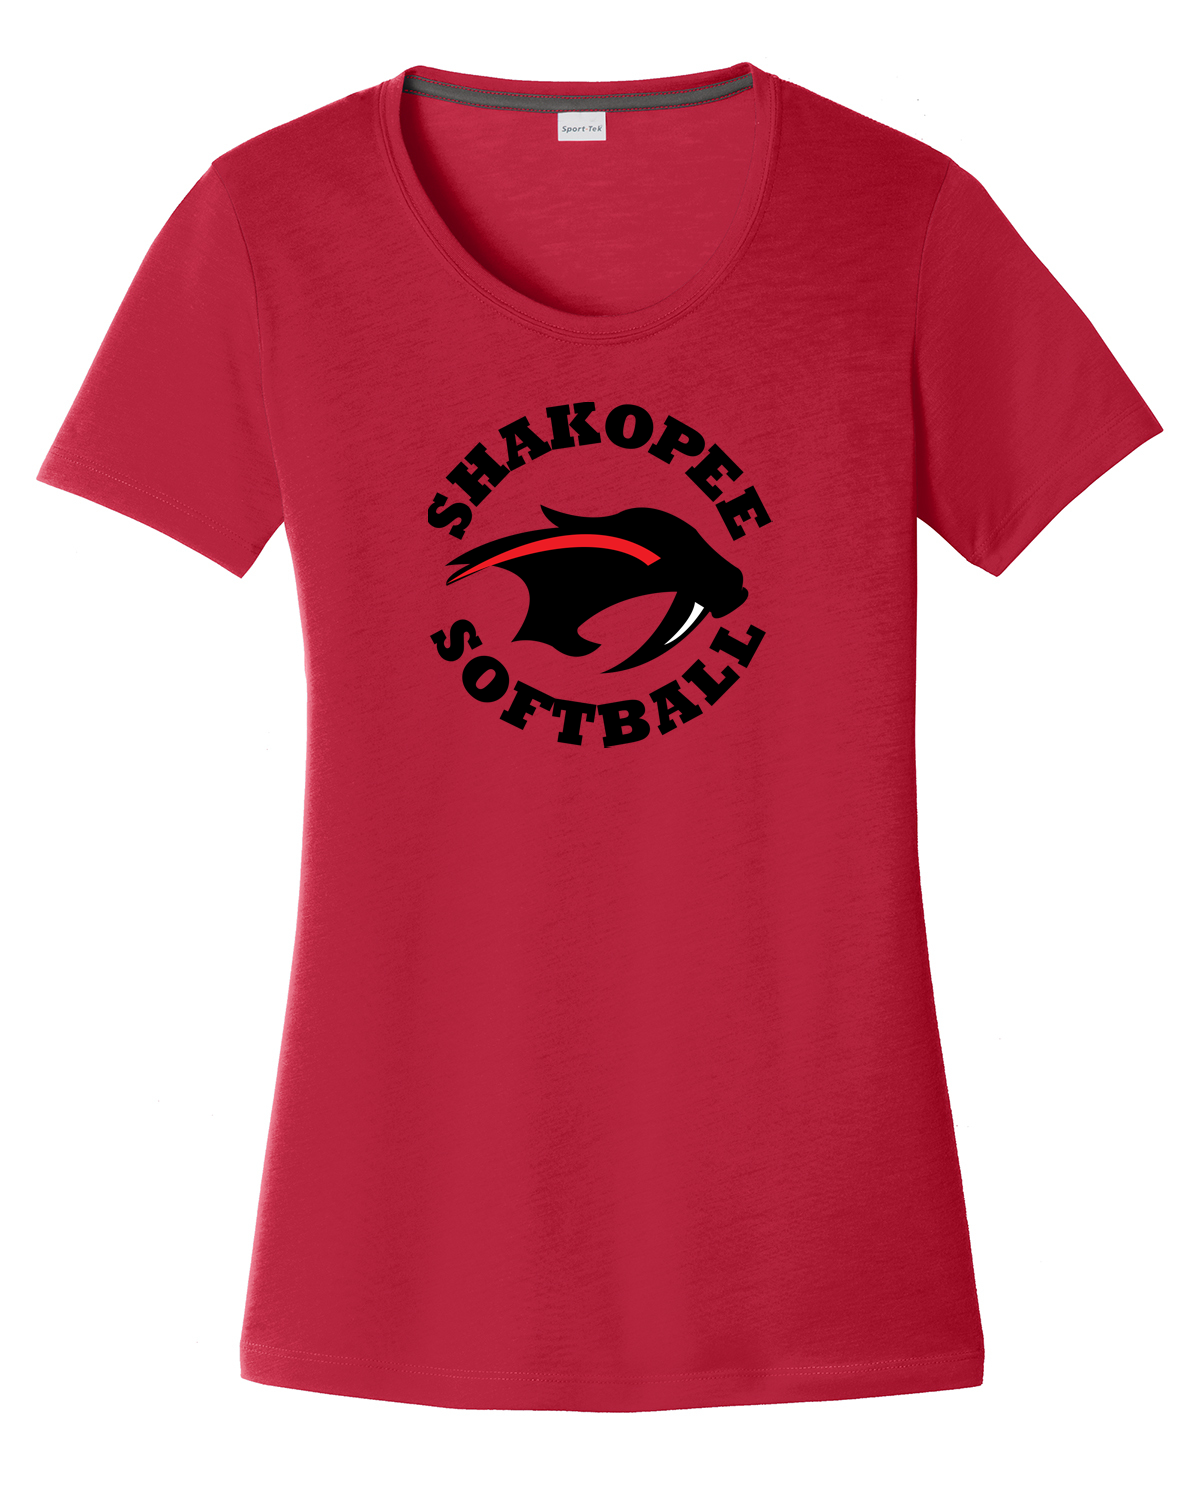 Shakopee Softball Women's CottonTouch Performance T-Shirt